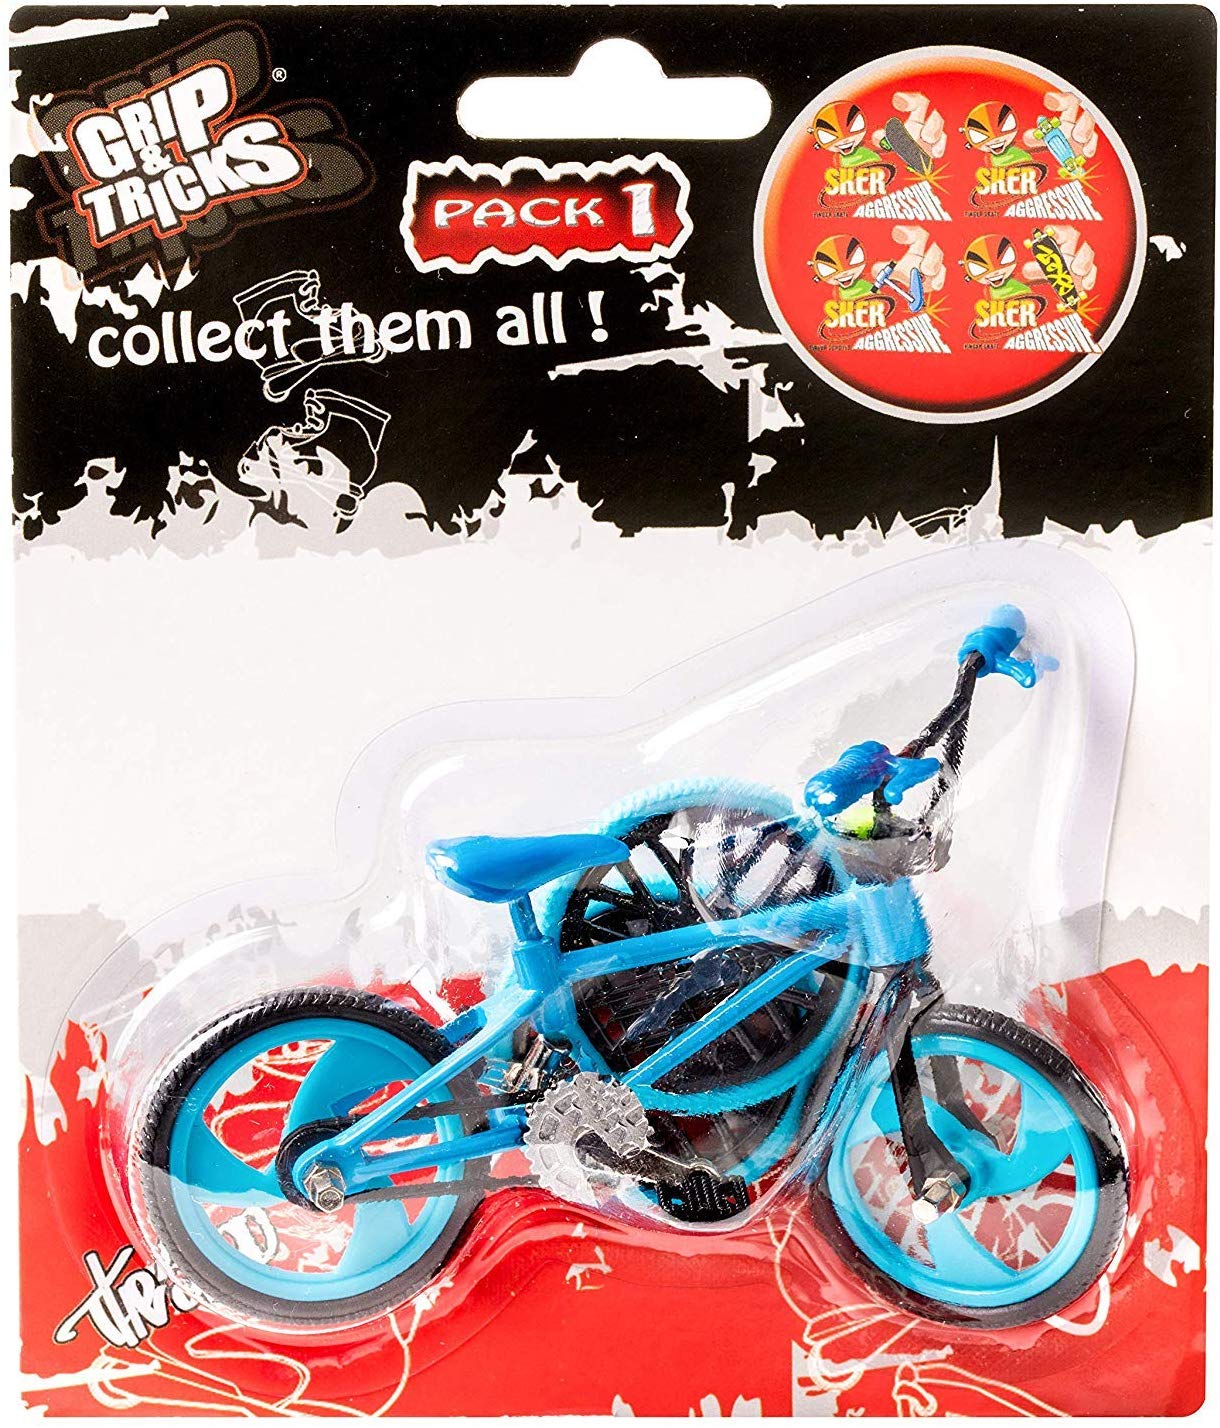 Finger BMX Grip & Tricks Mini BMX Freestyle Pack1 